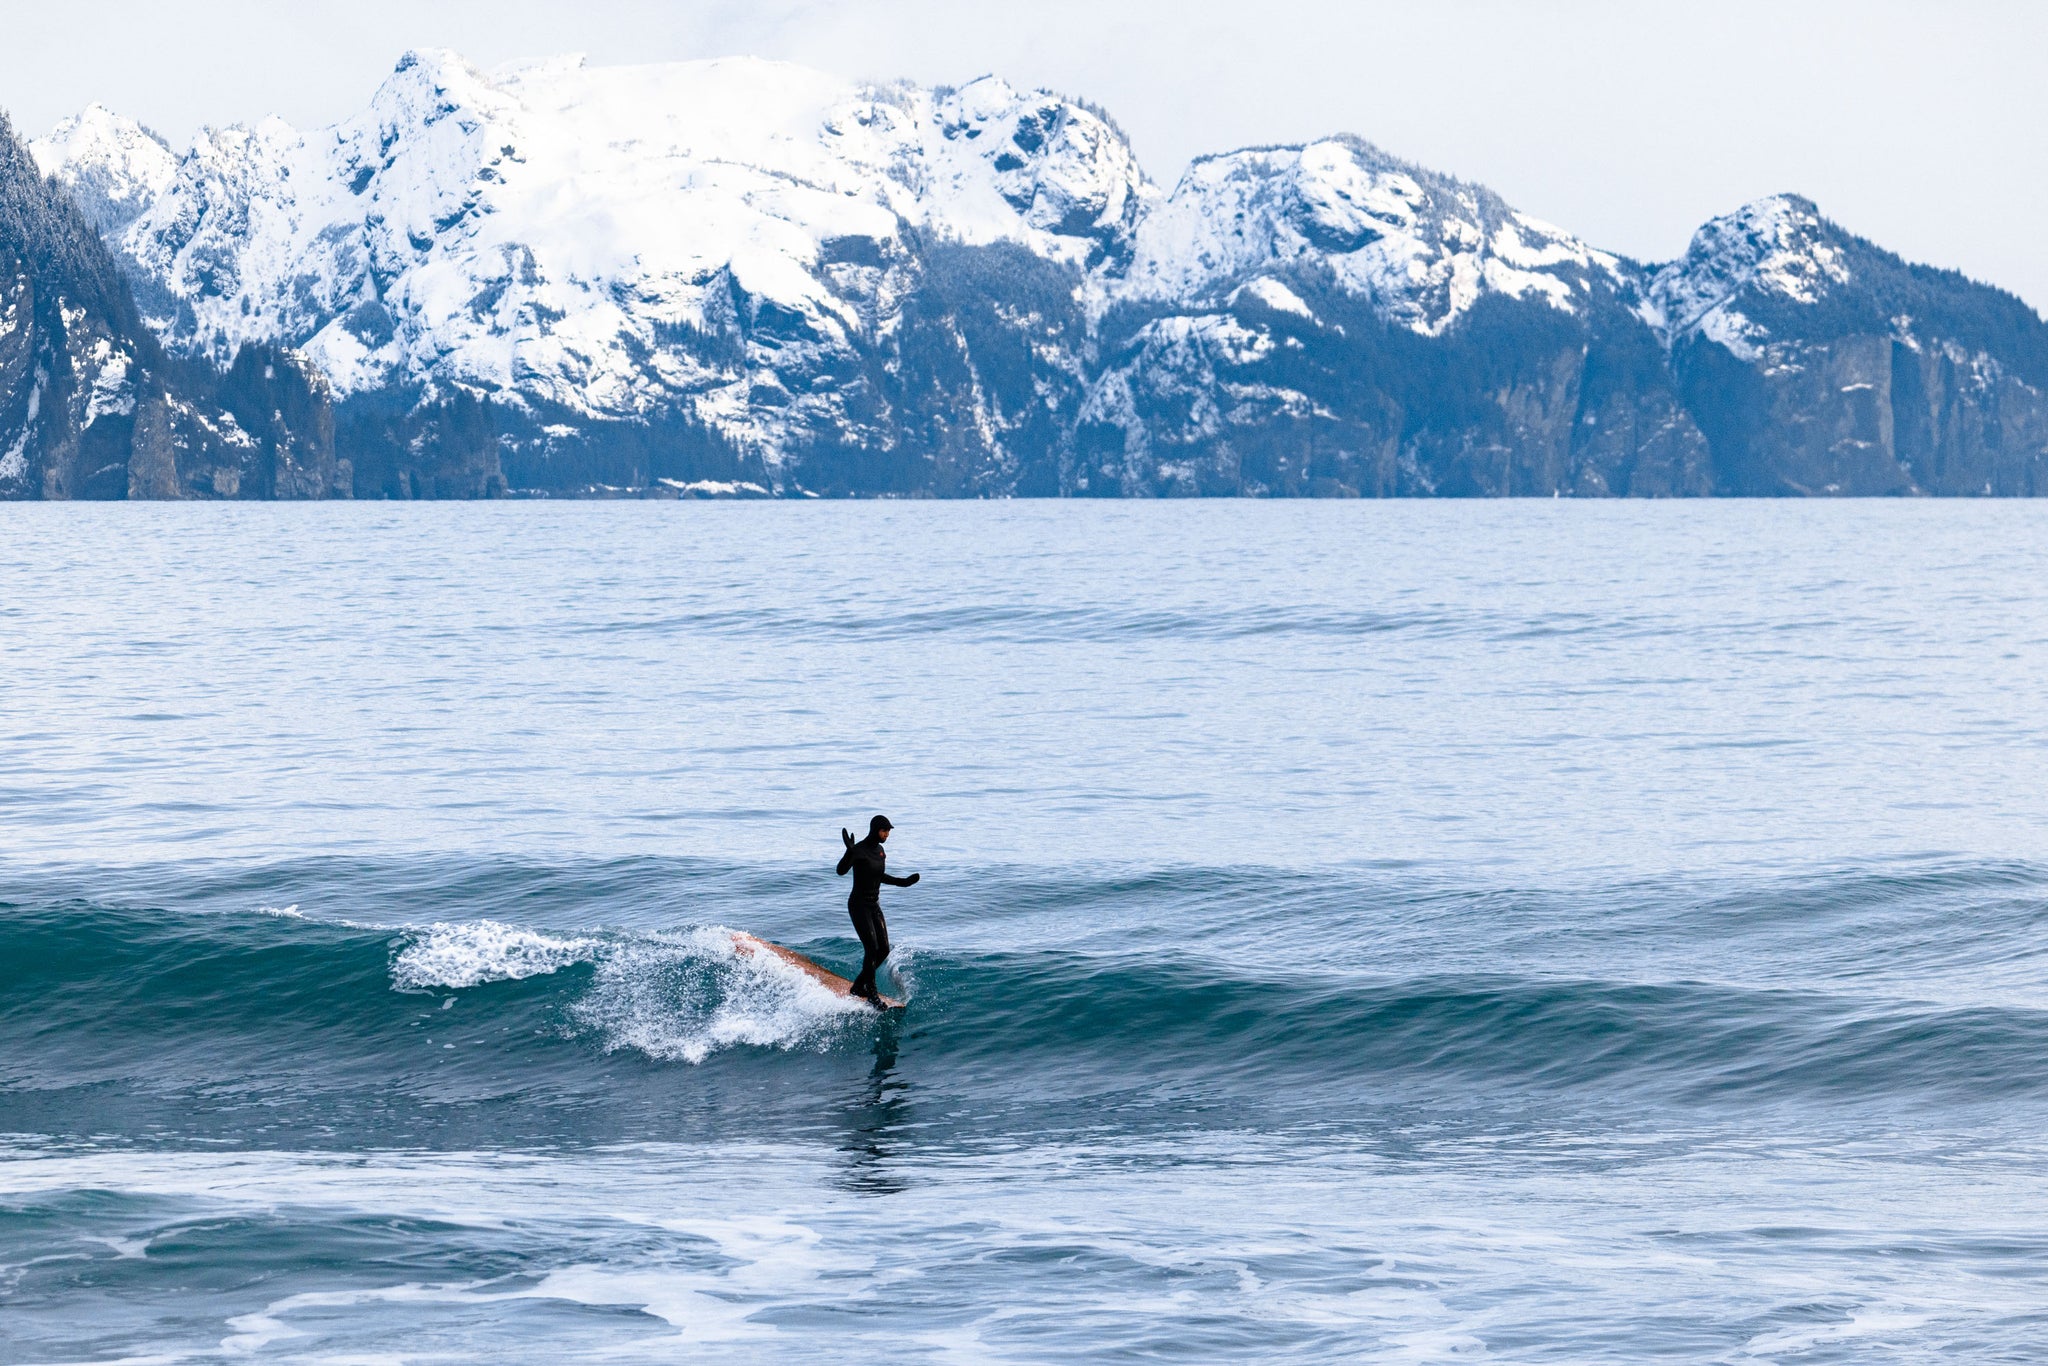 Bing Surfboards Alaska Anna Gudauskas Sarah Lee